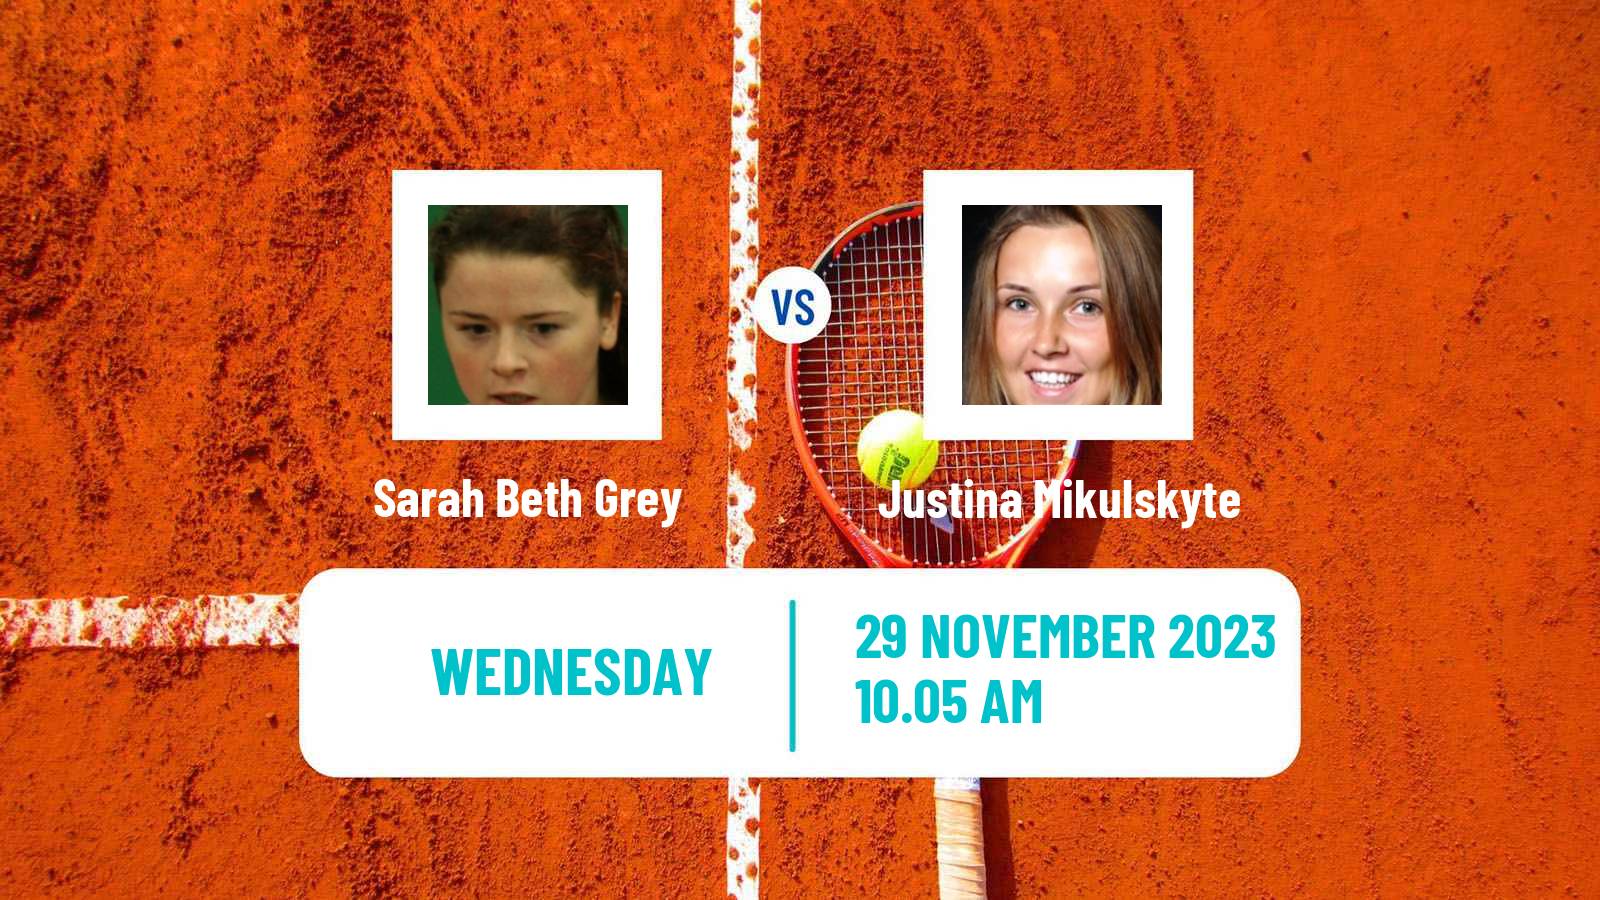 Tennis ITF W60 Trnava 3 Women Sarah Beth Grey - Justina Mikulskyte